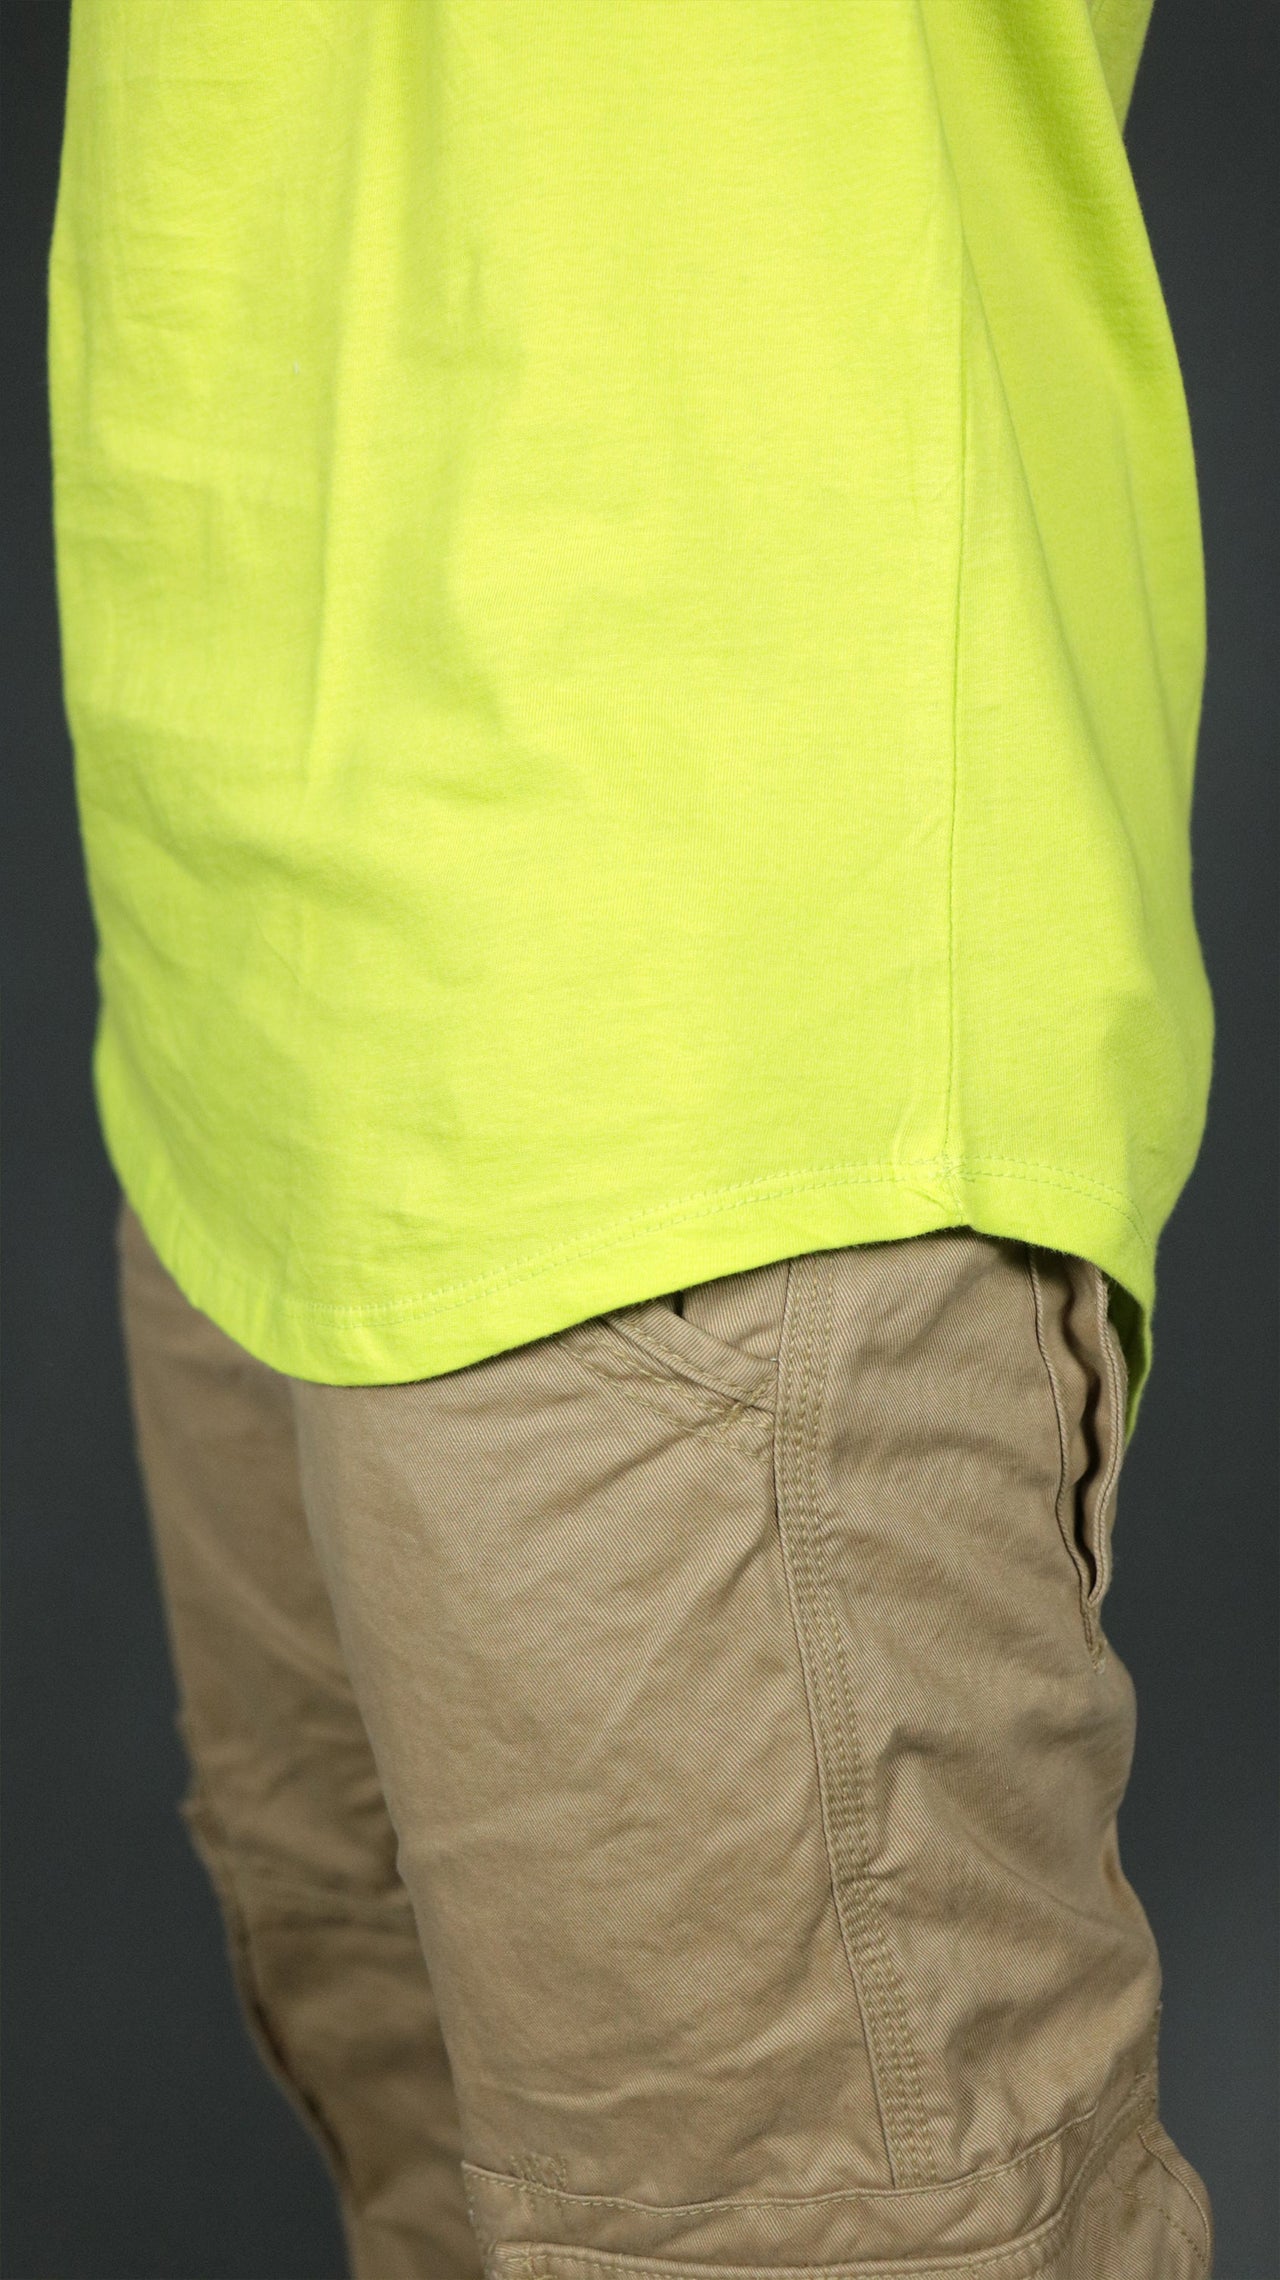 The yellow Jordan Craig longline shirt for men has a scoop bottom.